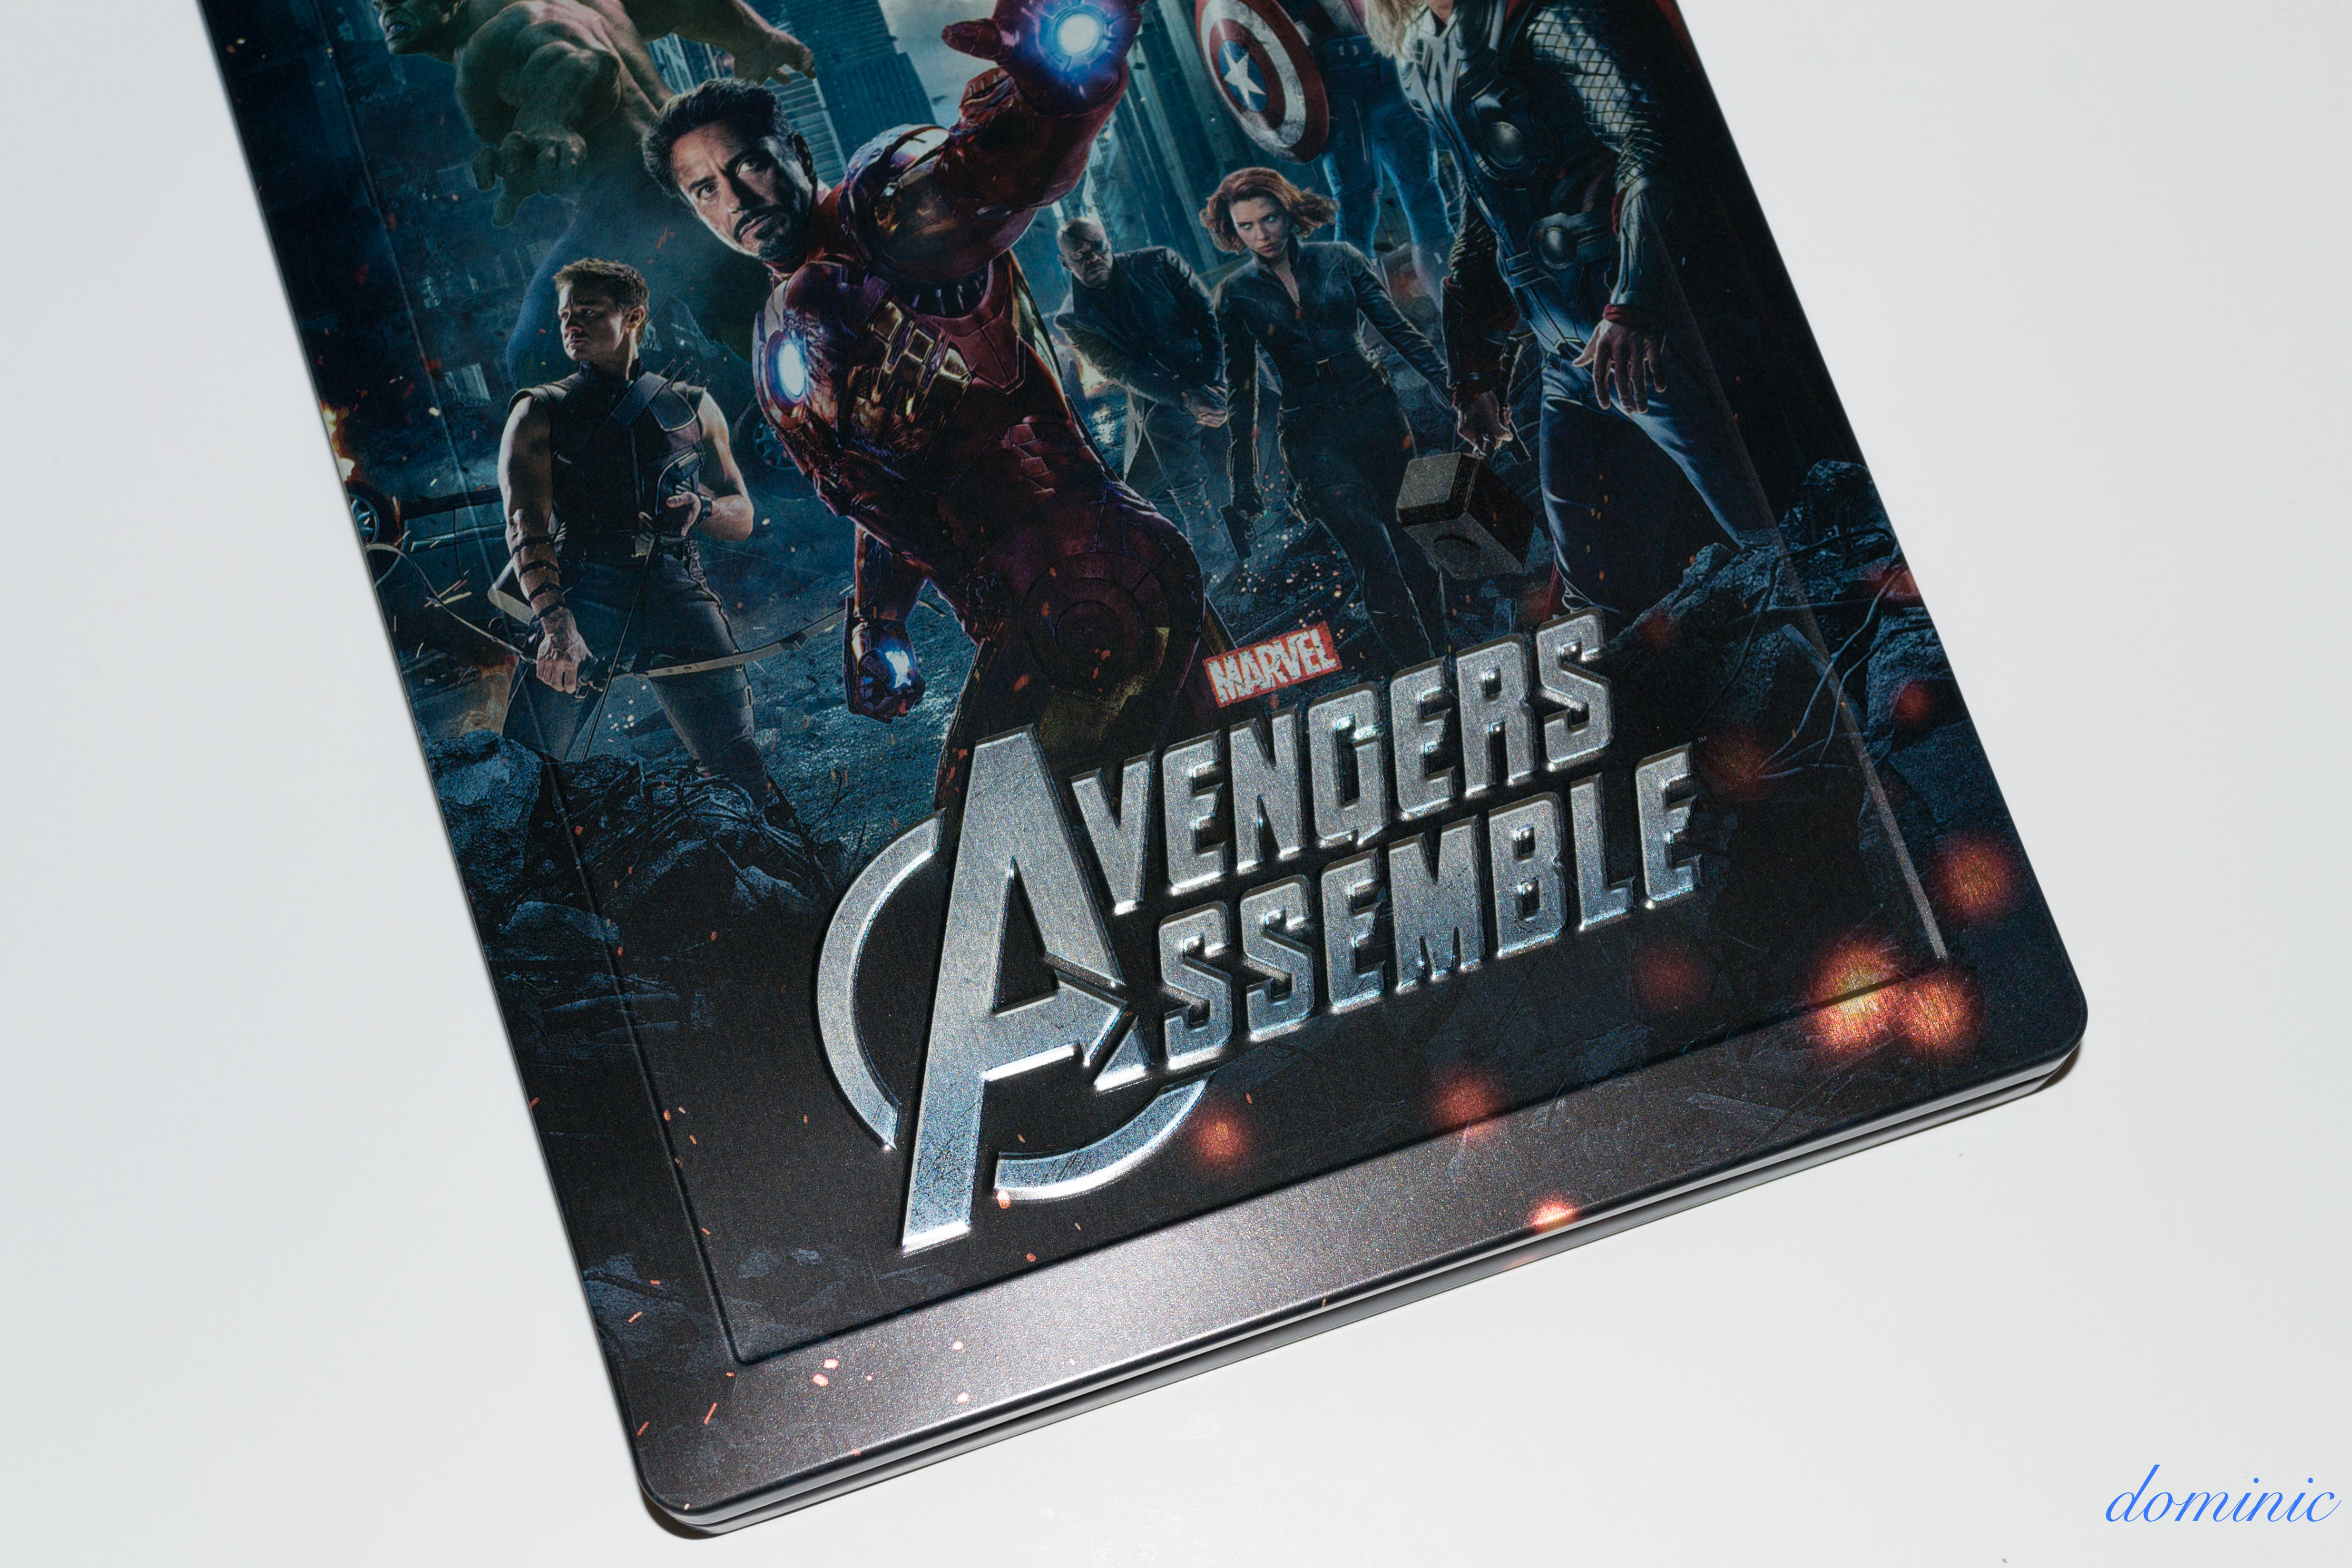 Avengers Aseemble - Front Title.jpg